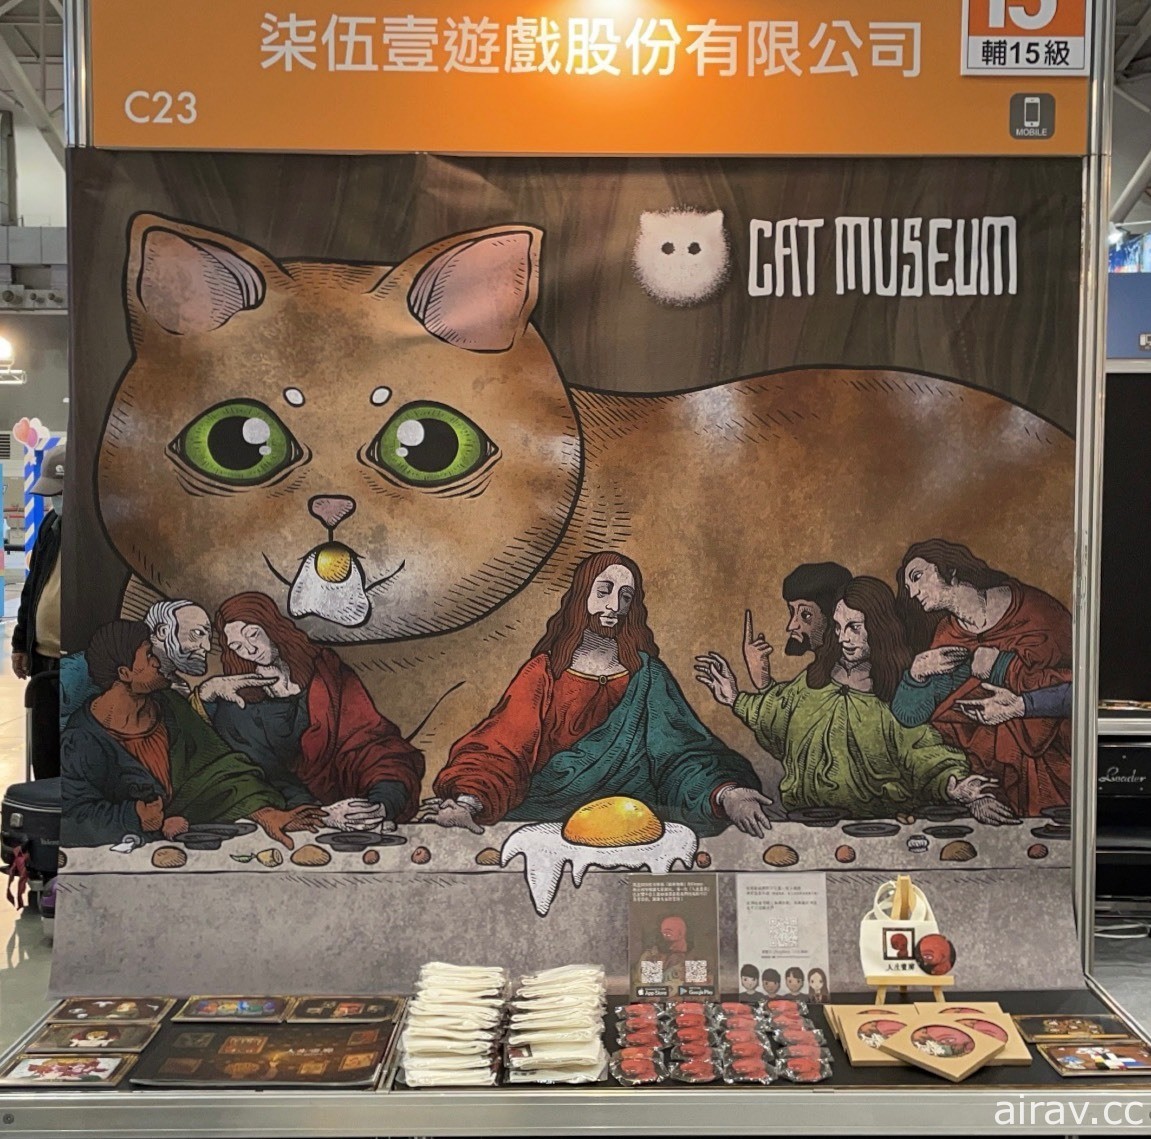 【TpGS 21】沿襲《人生畫廊》風格新作《貓博物館》 團隊：故事會光明一點